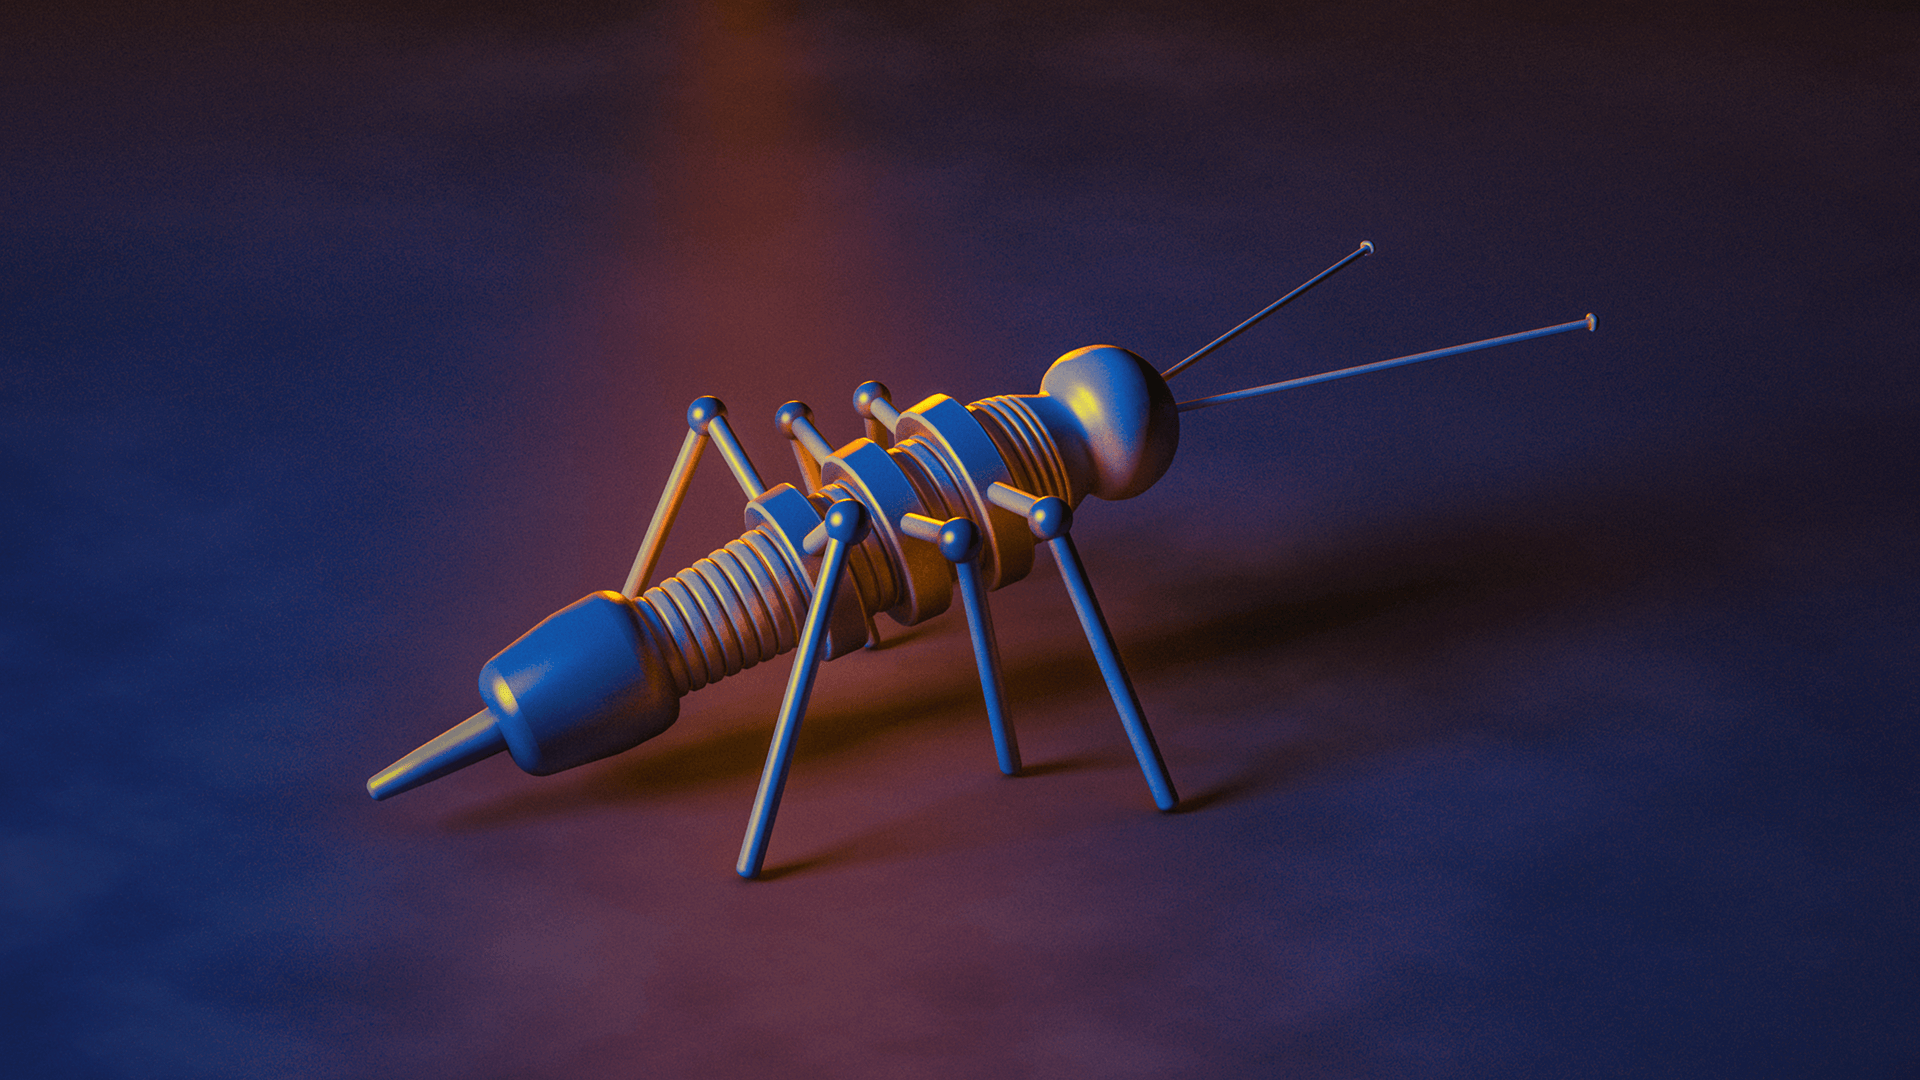 Ant Robot Design by nikolae